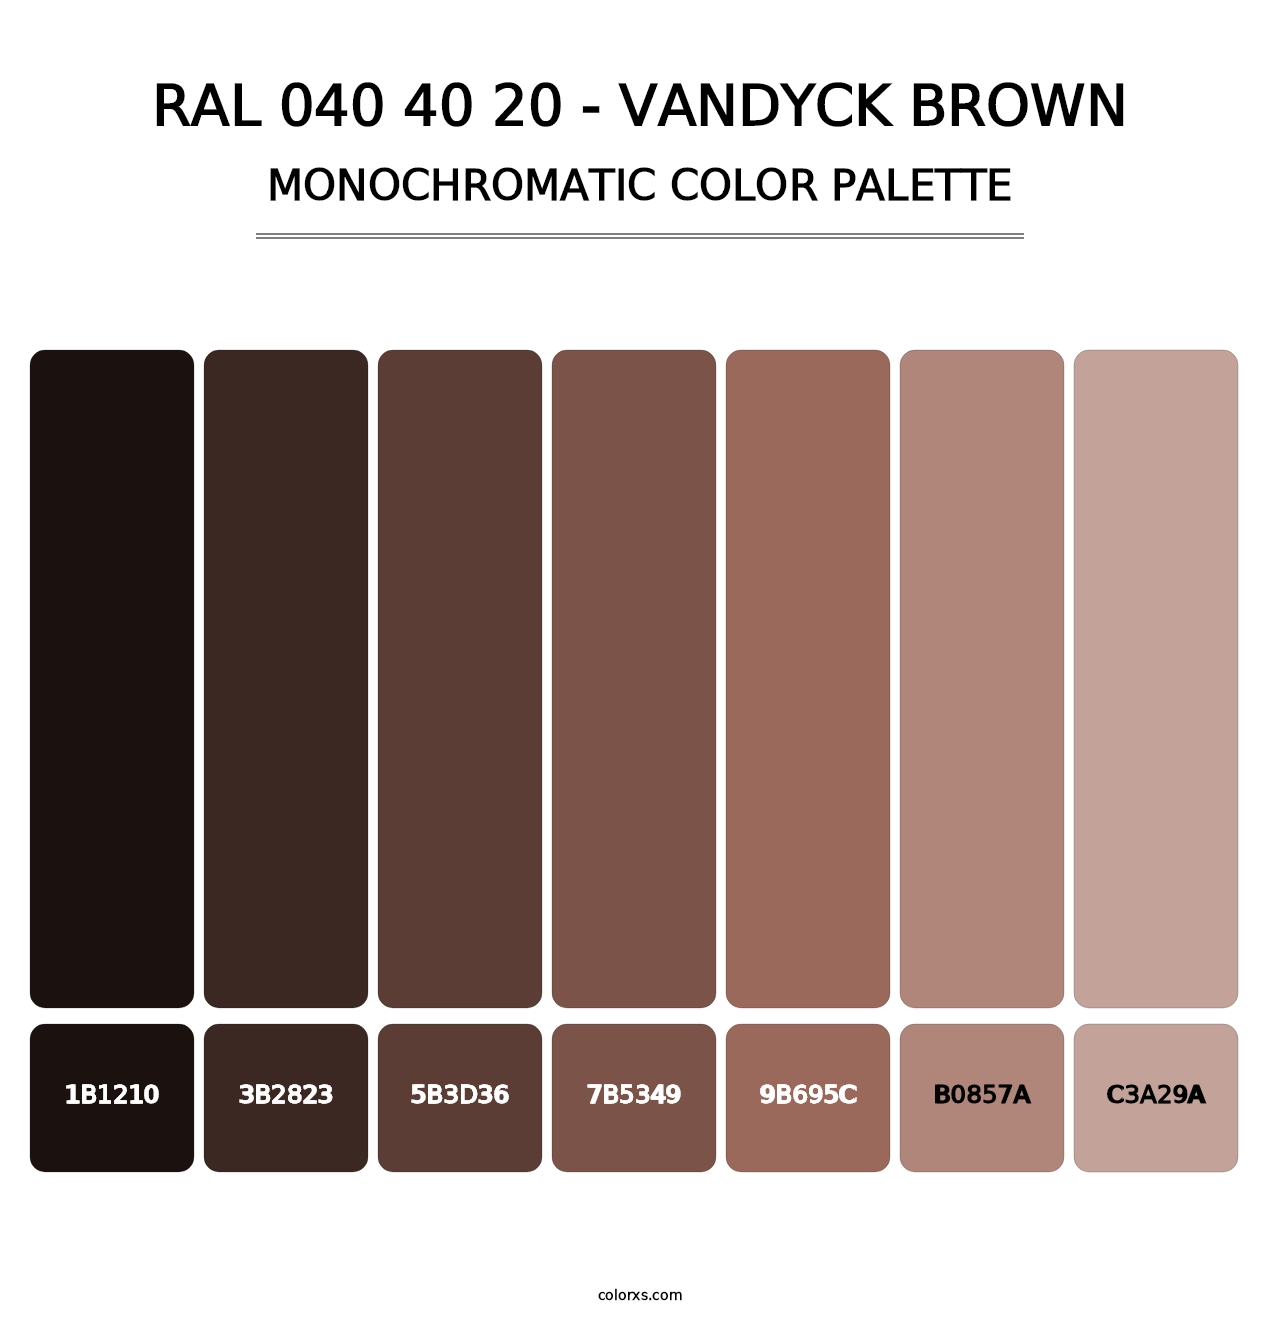 RAL 040 40 20 - Vandyck Brown - Monochromatic Color Palette